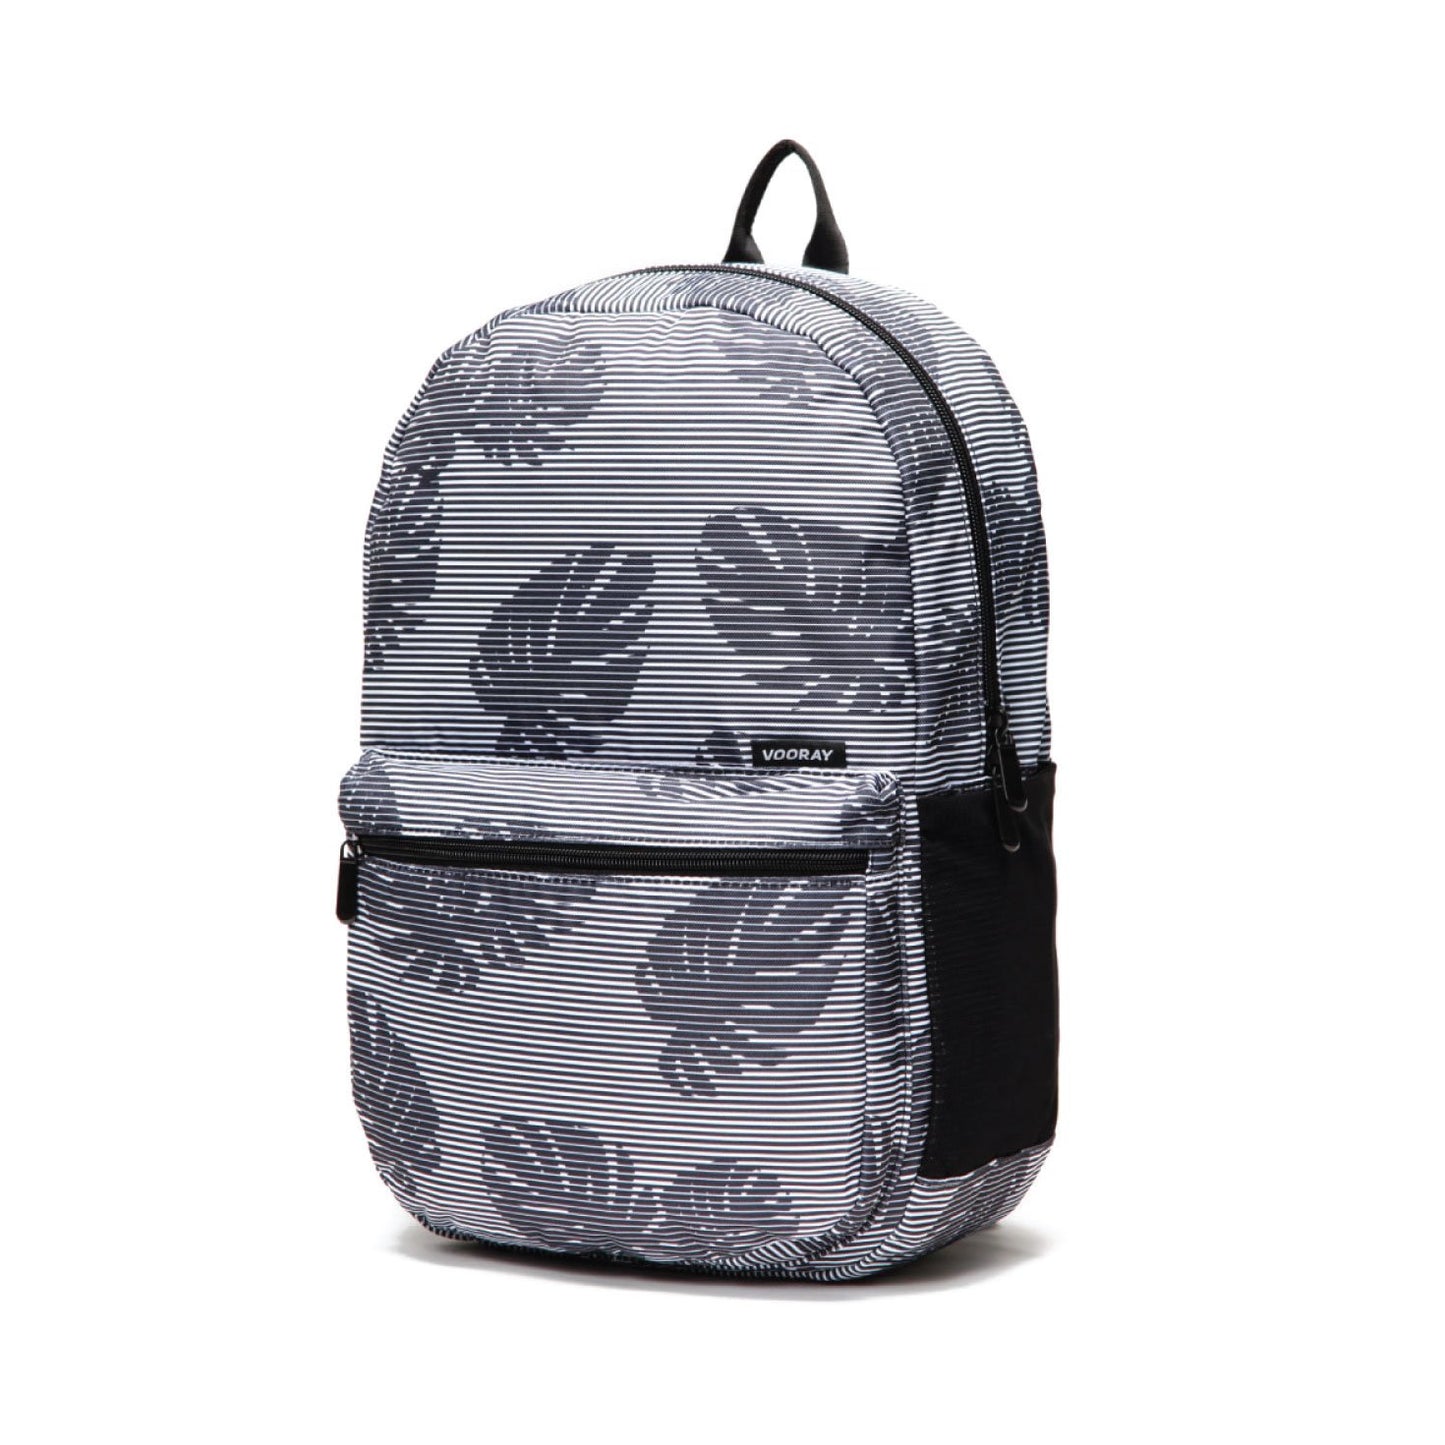 ACE Backpack - Tropic Stripe